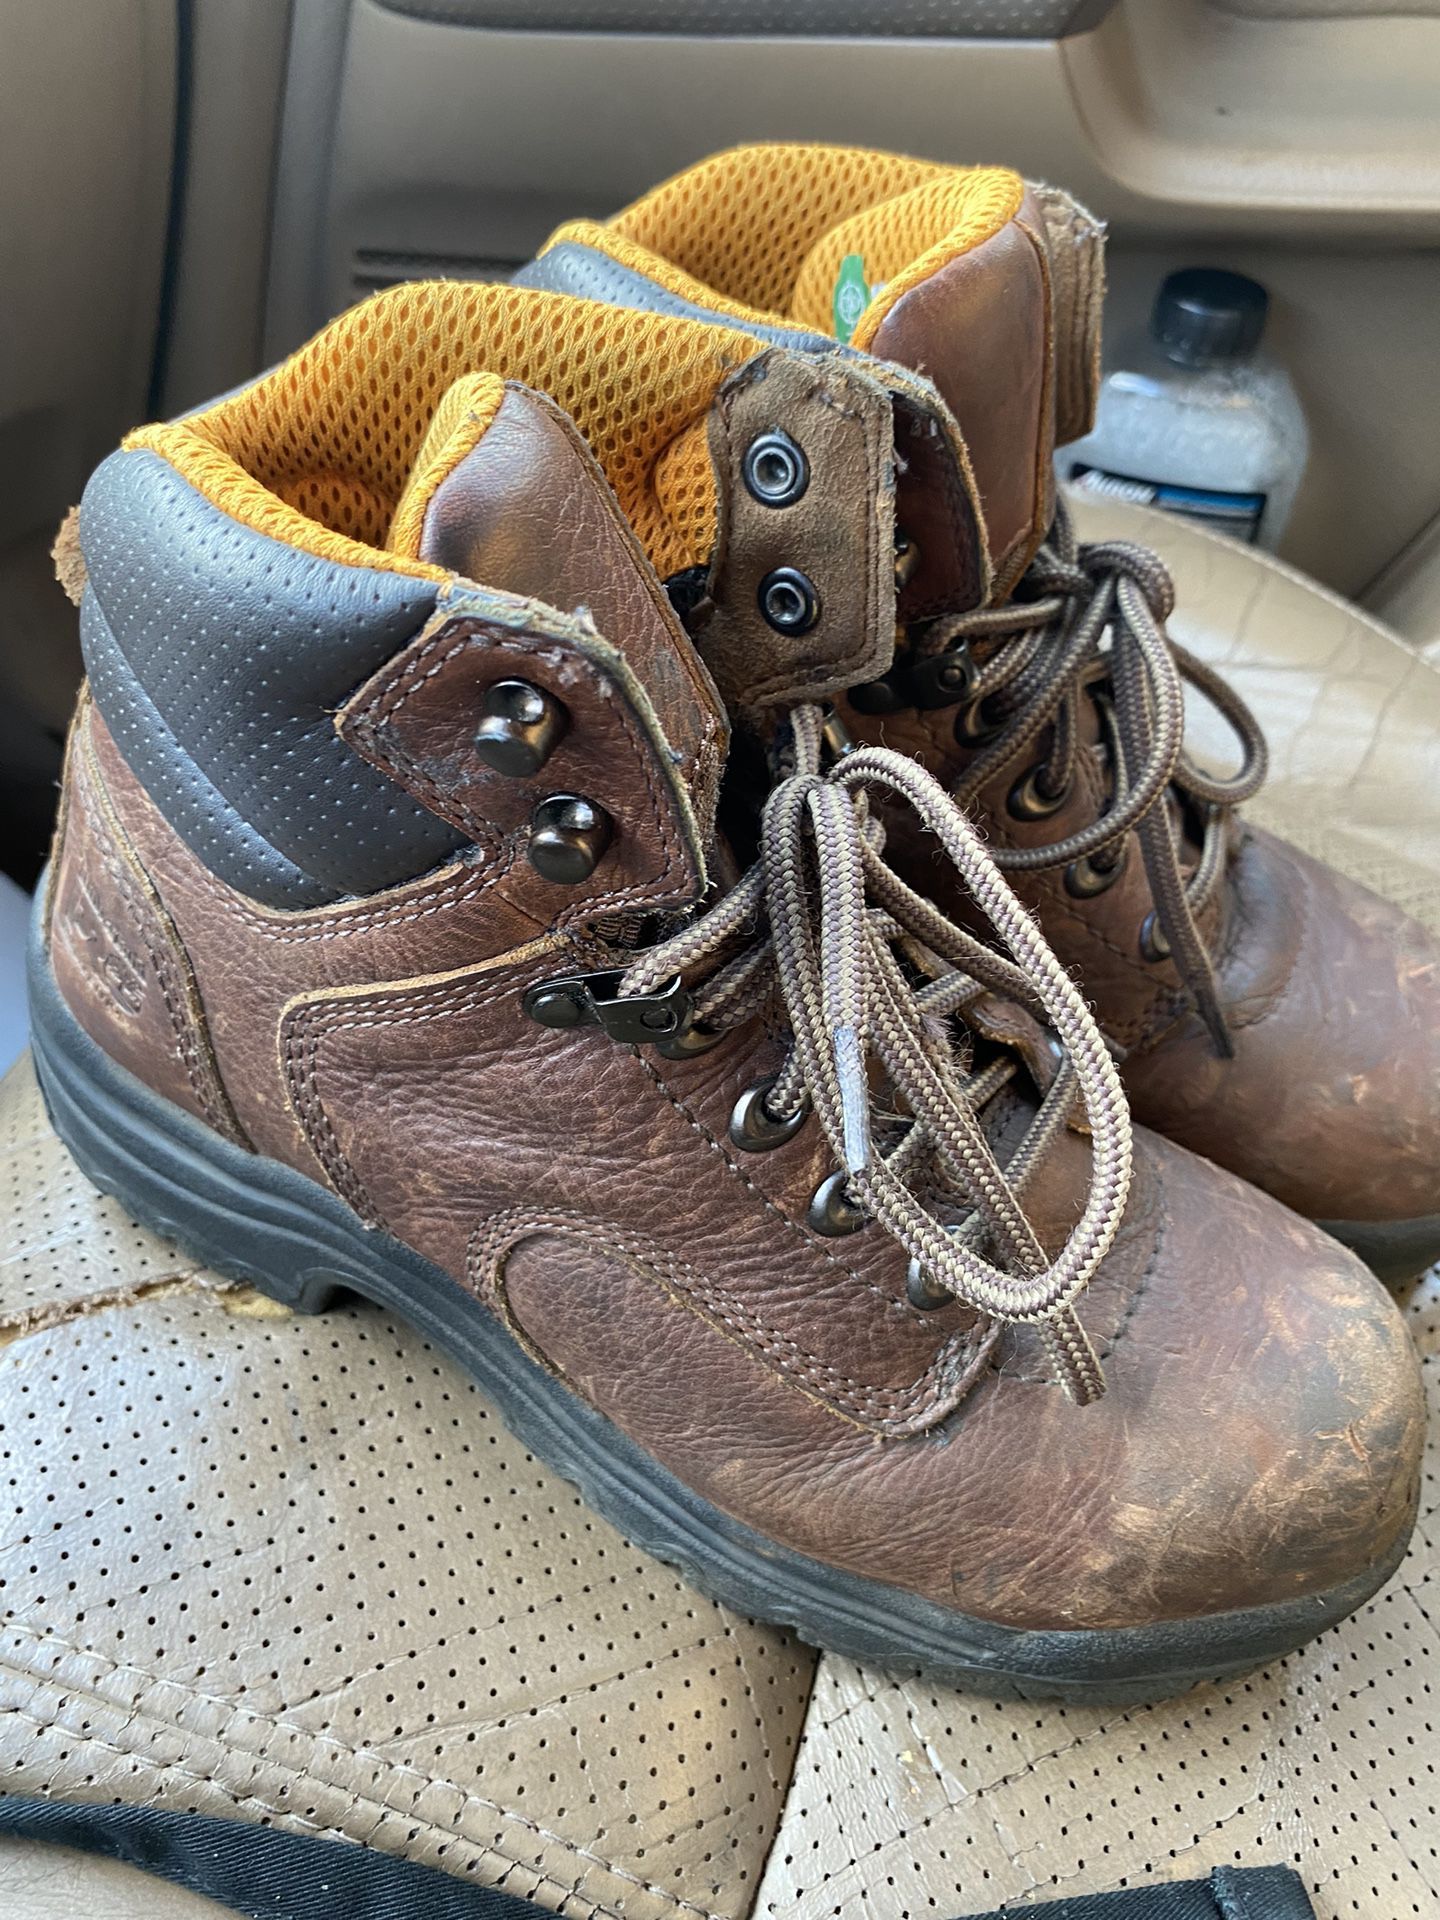 Timberland Work Boots